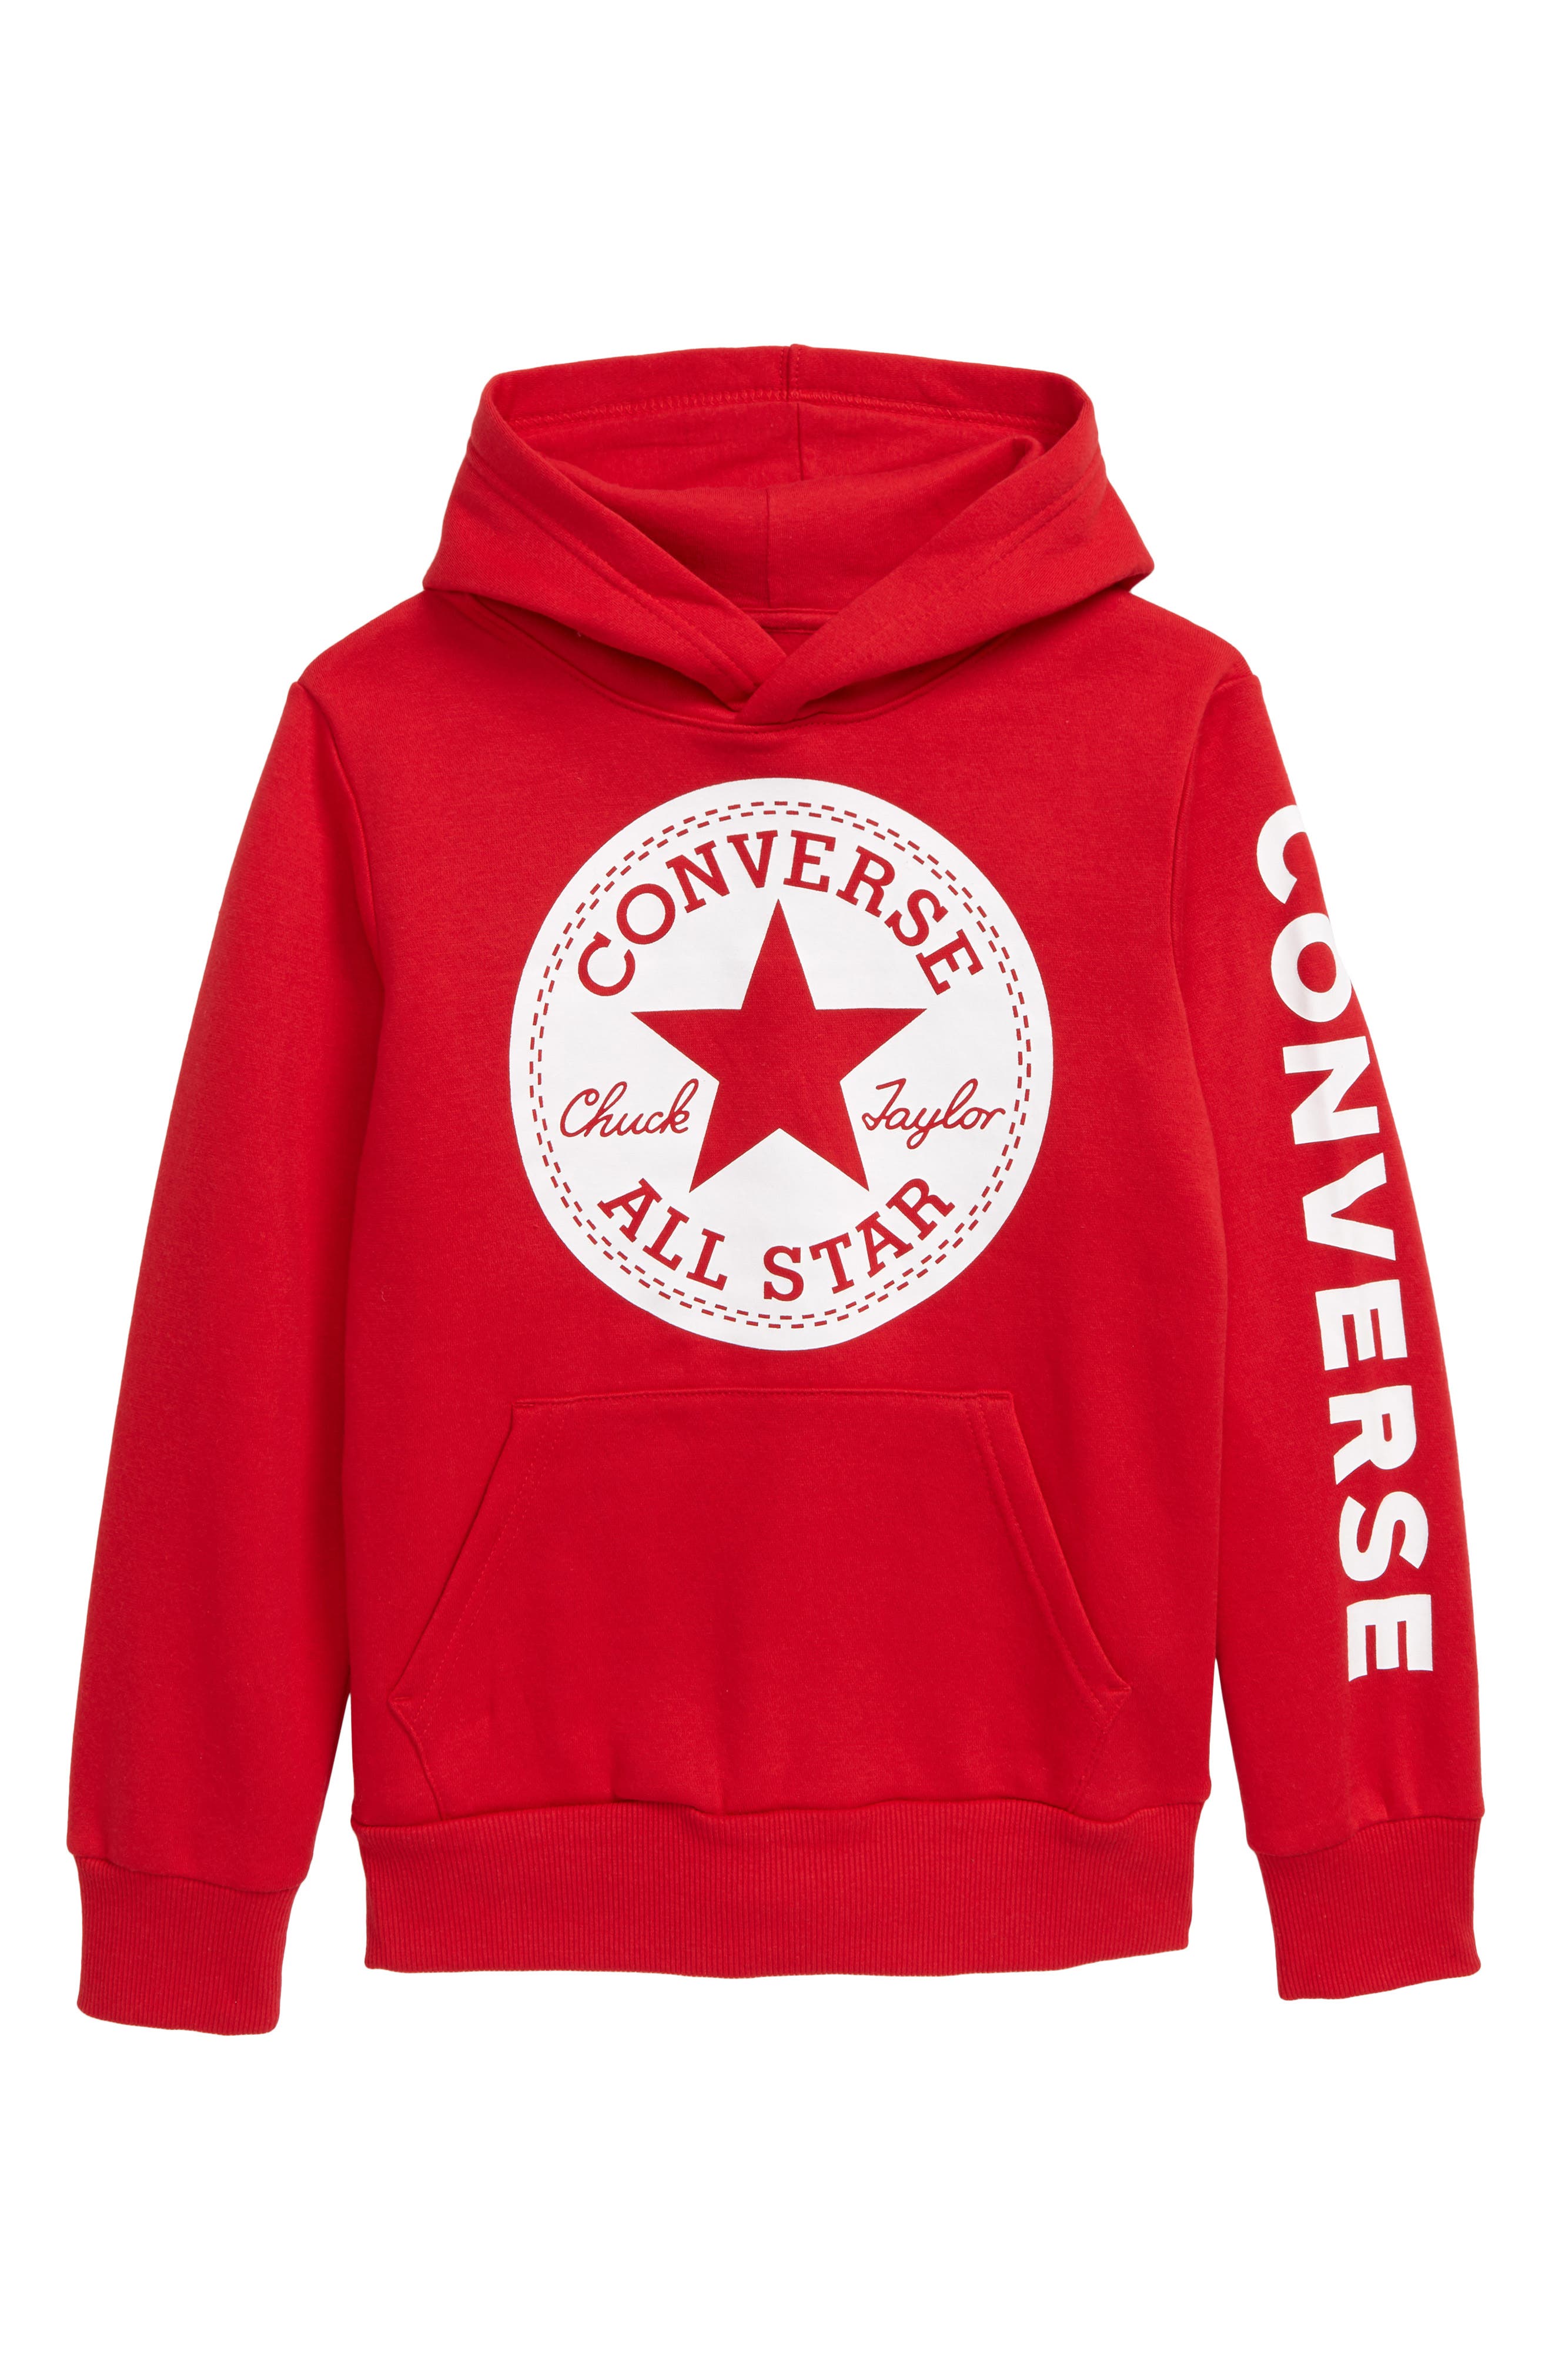 converse all star hoodie